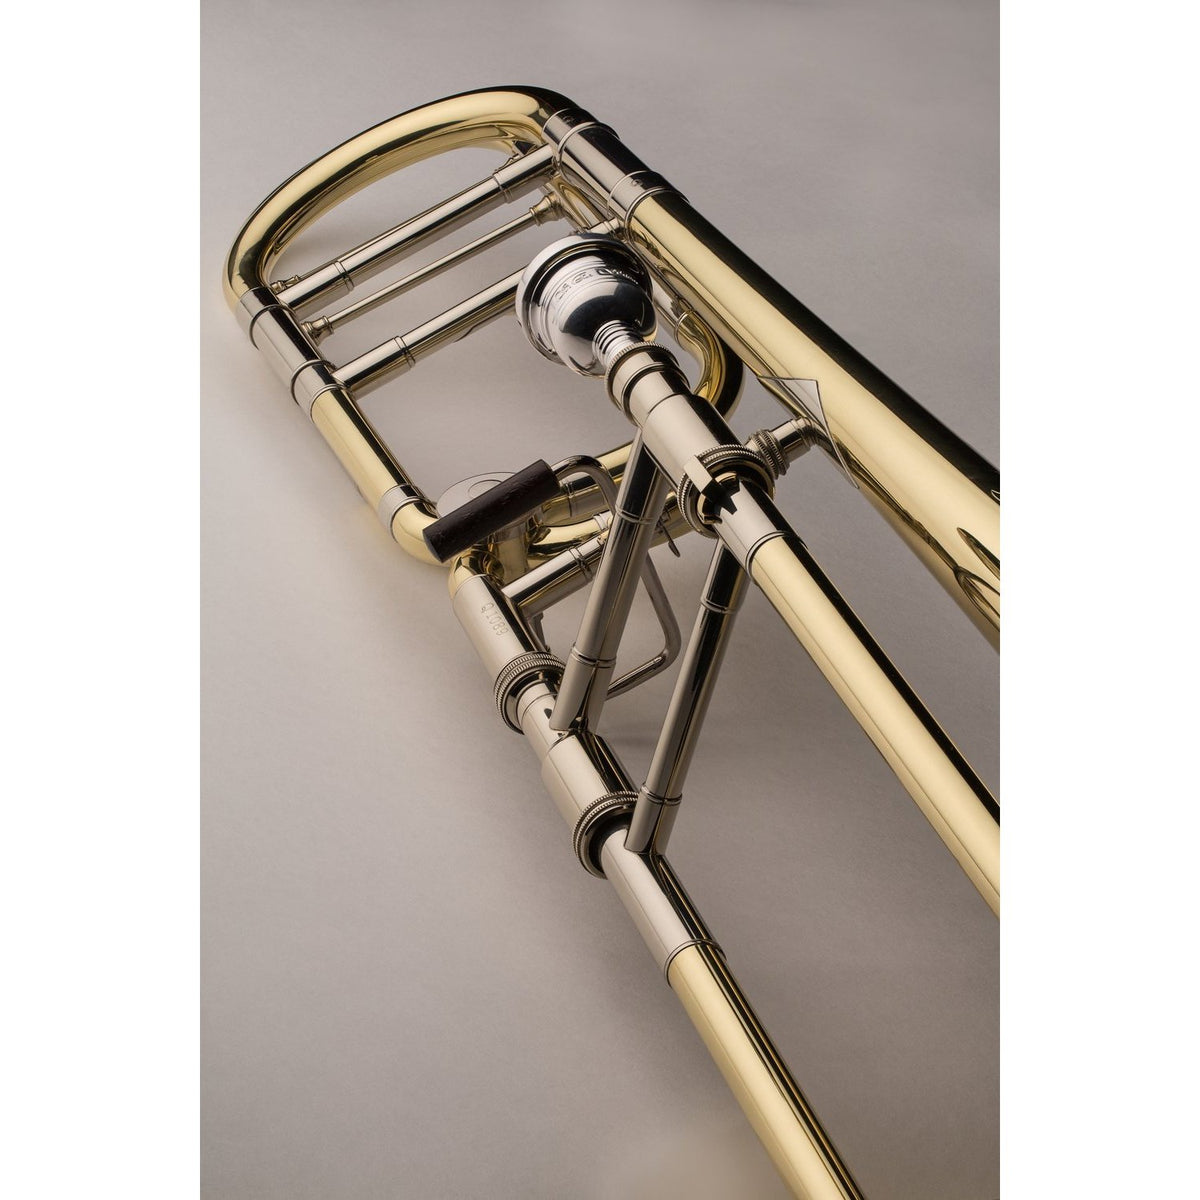 S.E. Shires - Q30YR - Q Series Large Bore Bb/F Tenor Trombone with Rotary Valve-Trombone-S.E. Shires-Music Elements